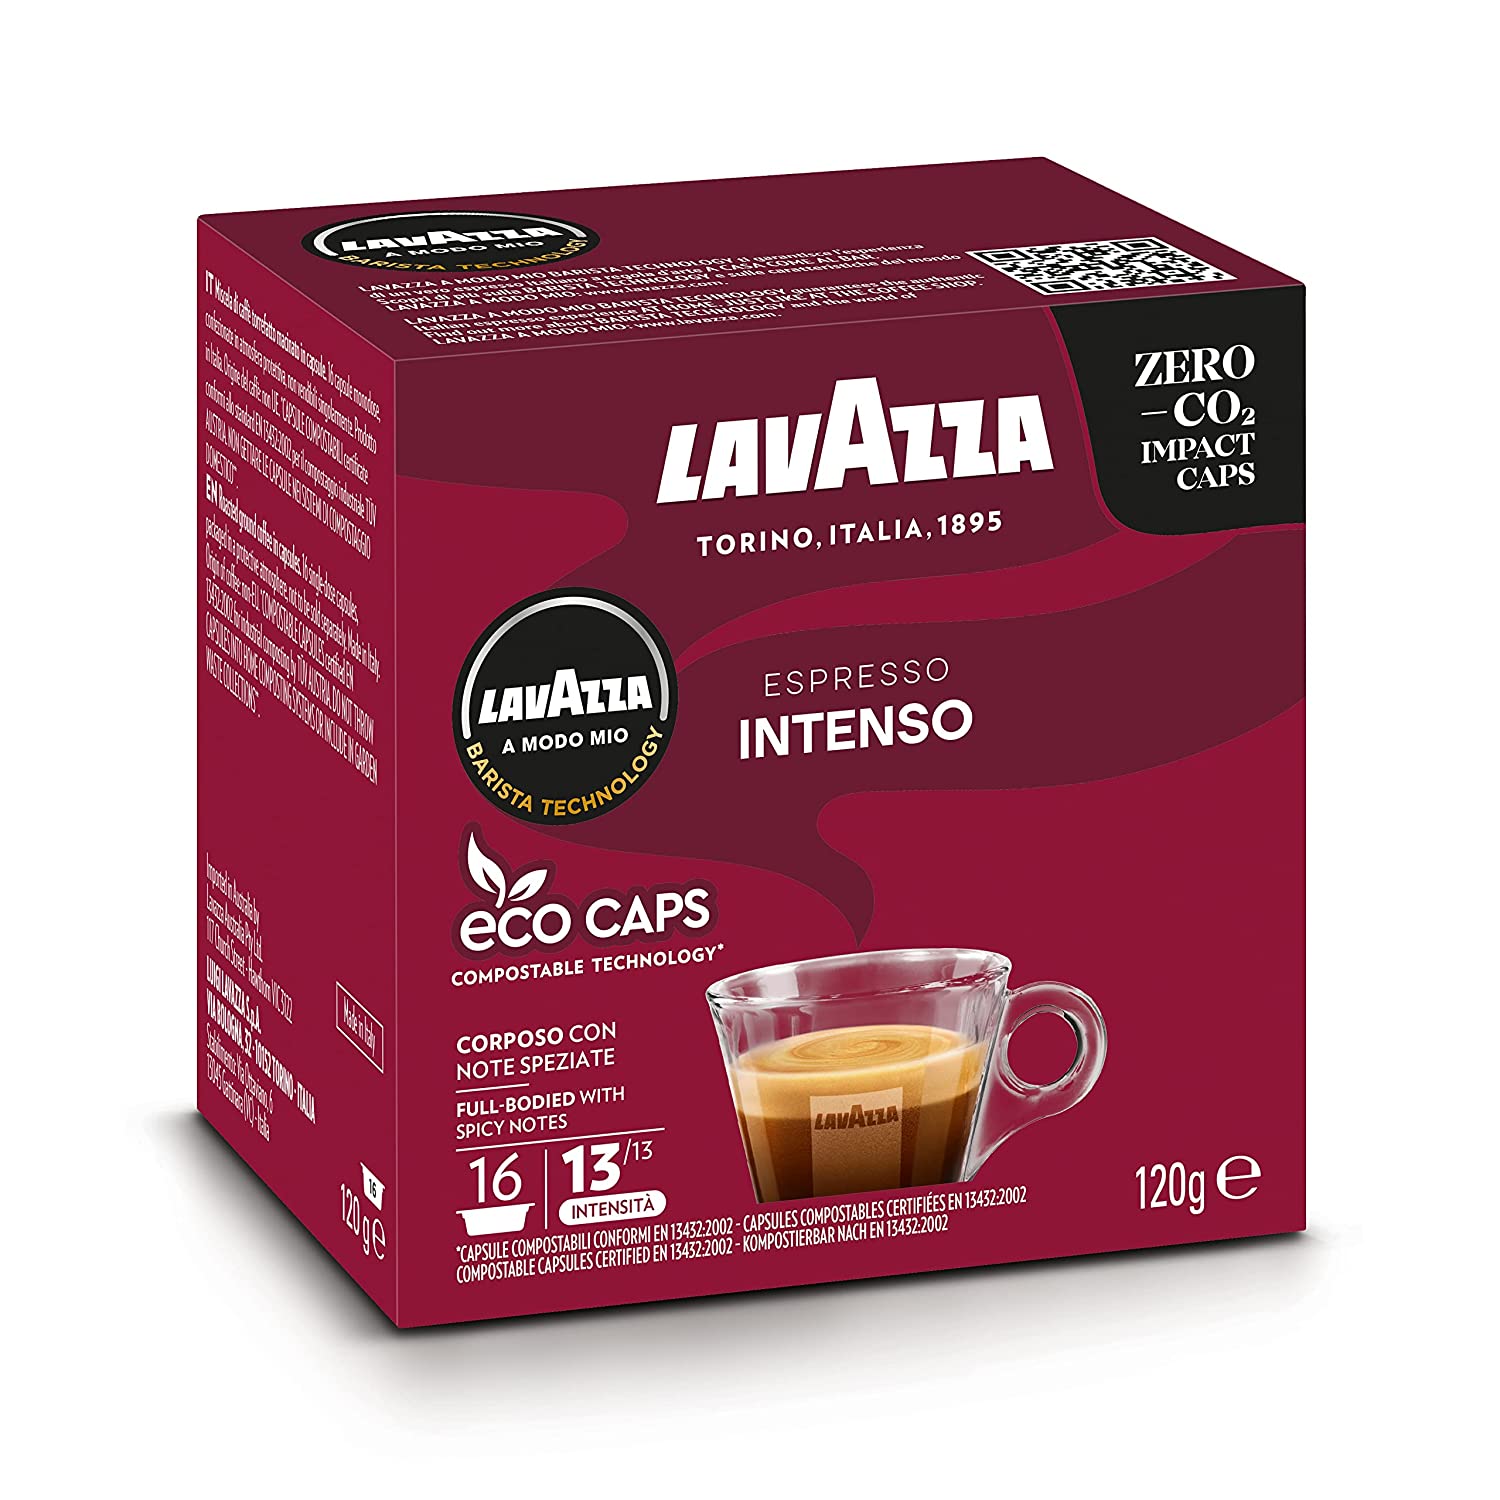 Lavazza A Modo Mio, Espresso Intenso, Kaffee, Kaffeekapseln, 16 Kapseln, Eco Caps